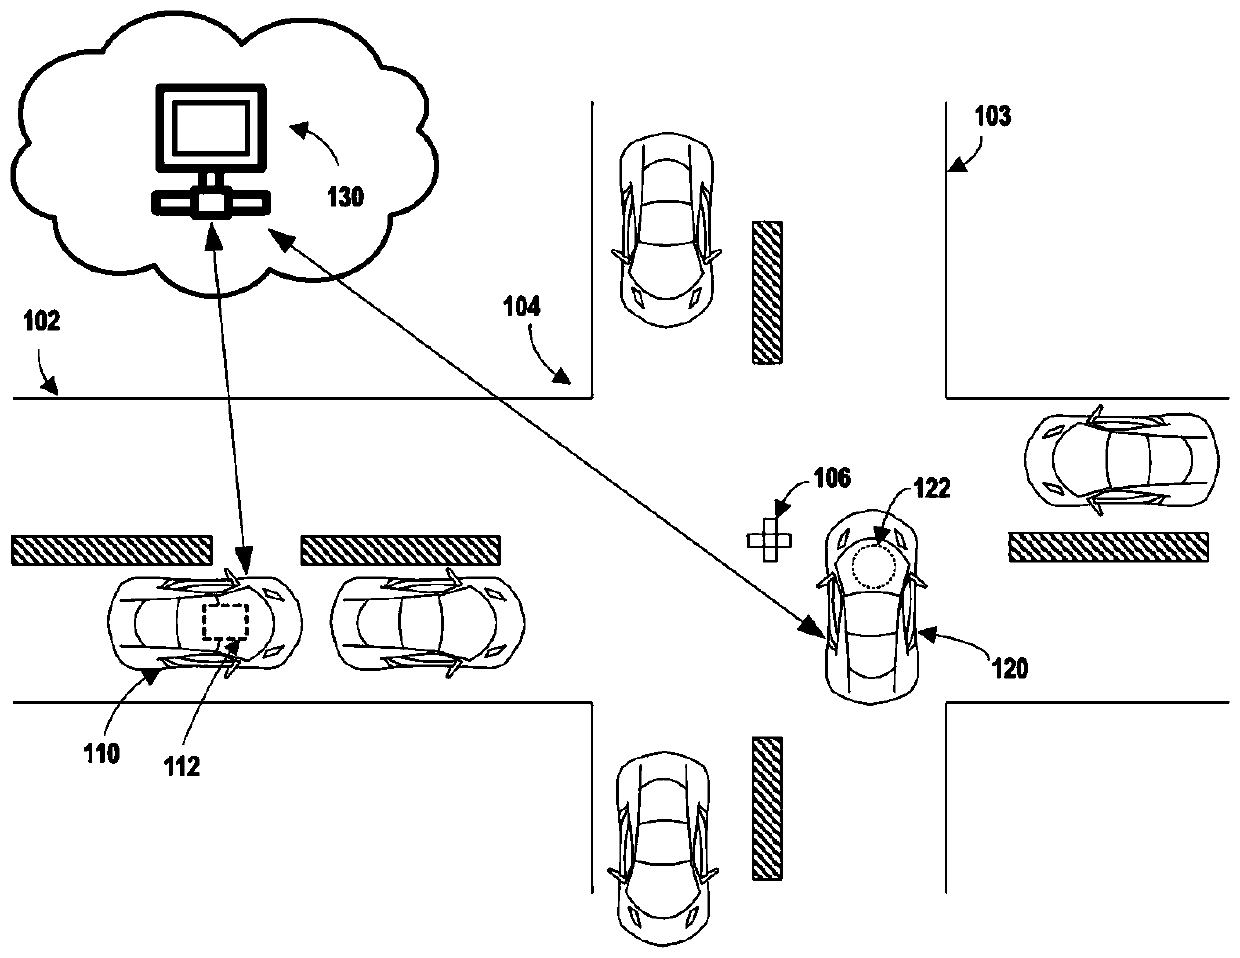 Adaptive traffic control using vehicle trajectory data